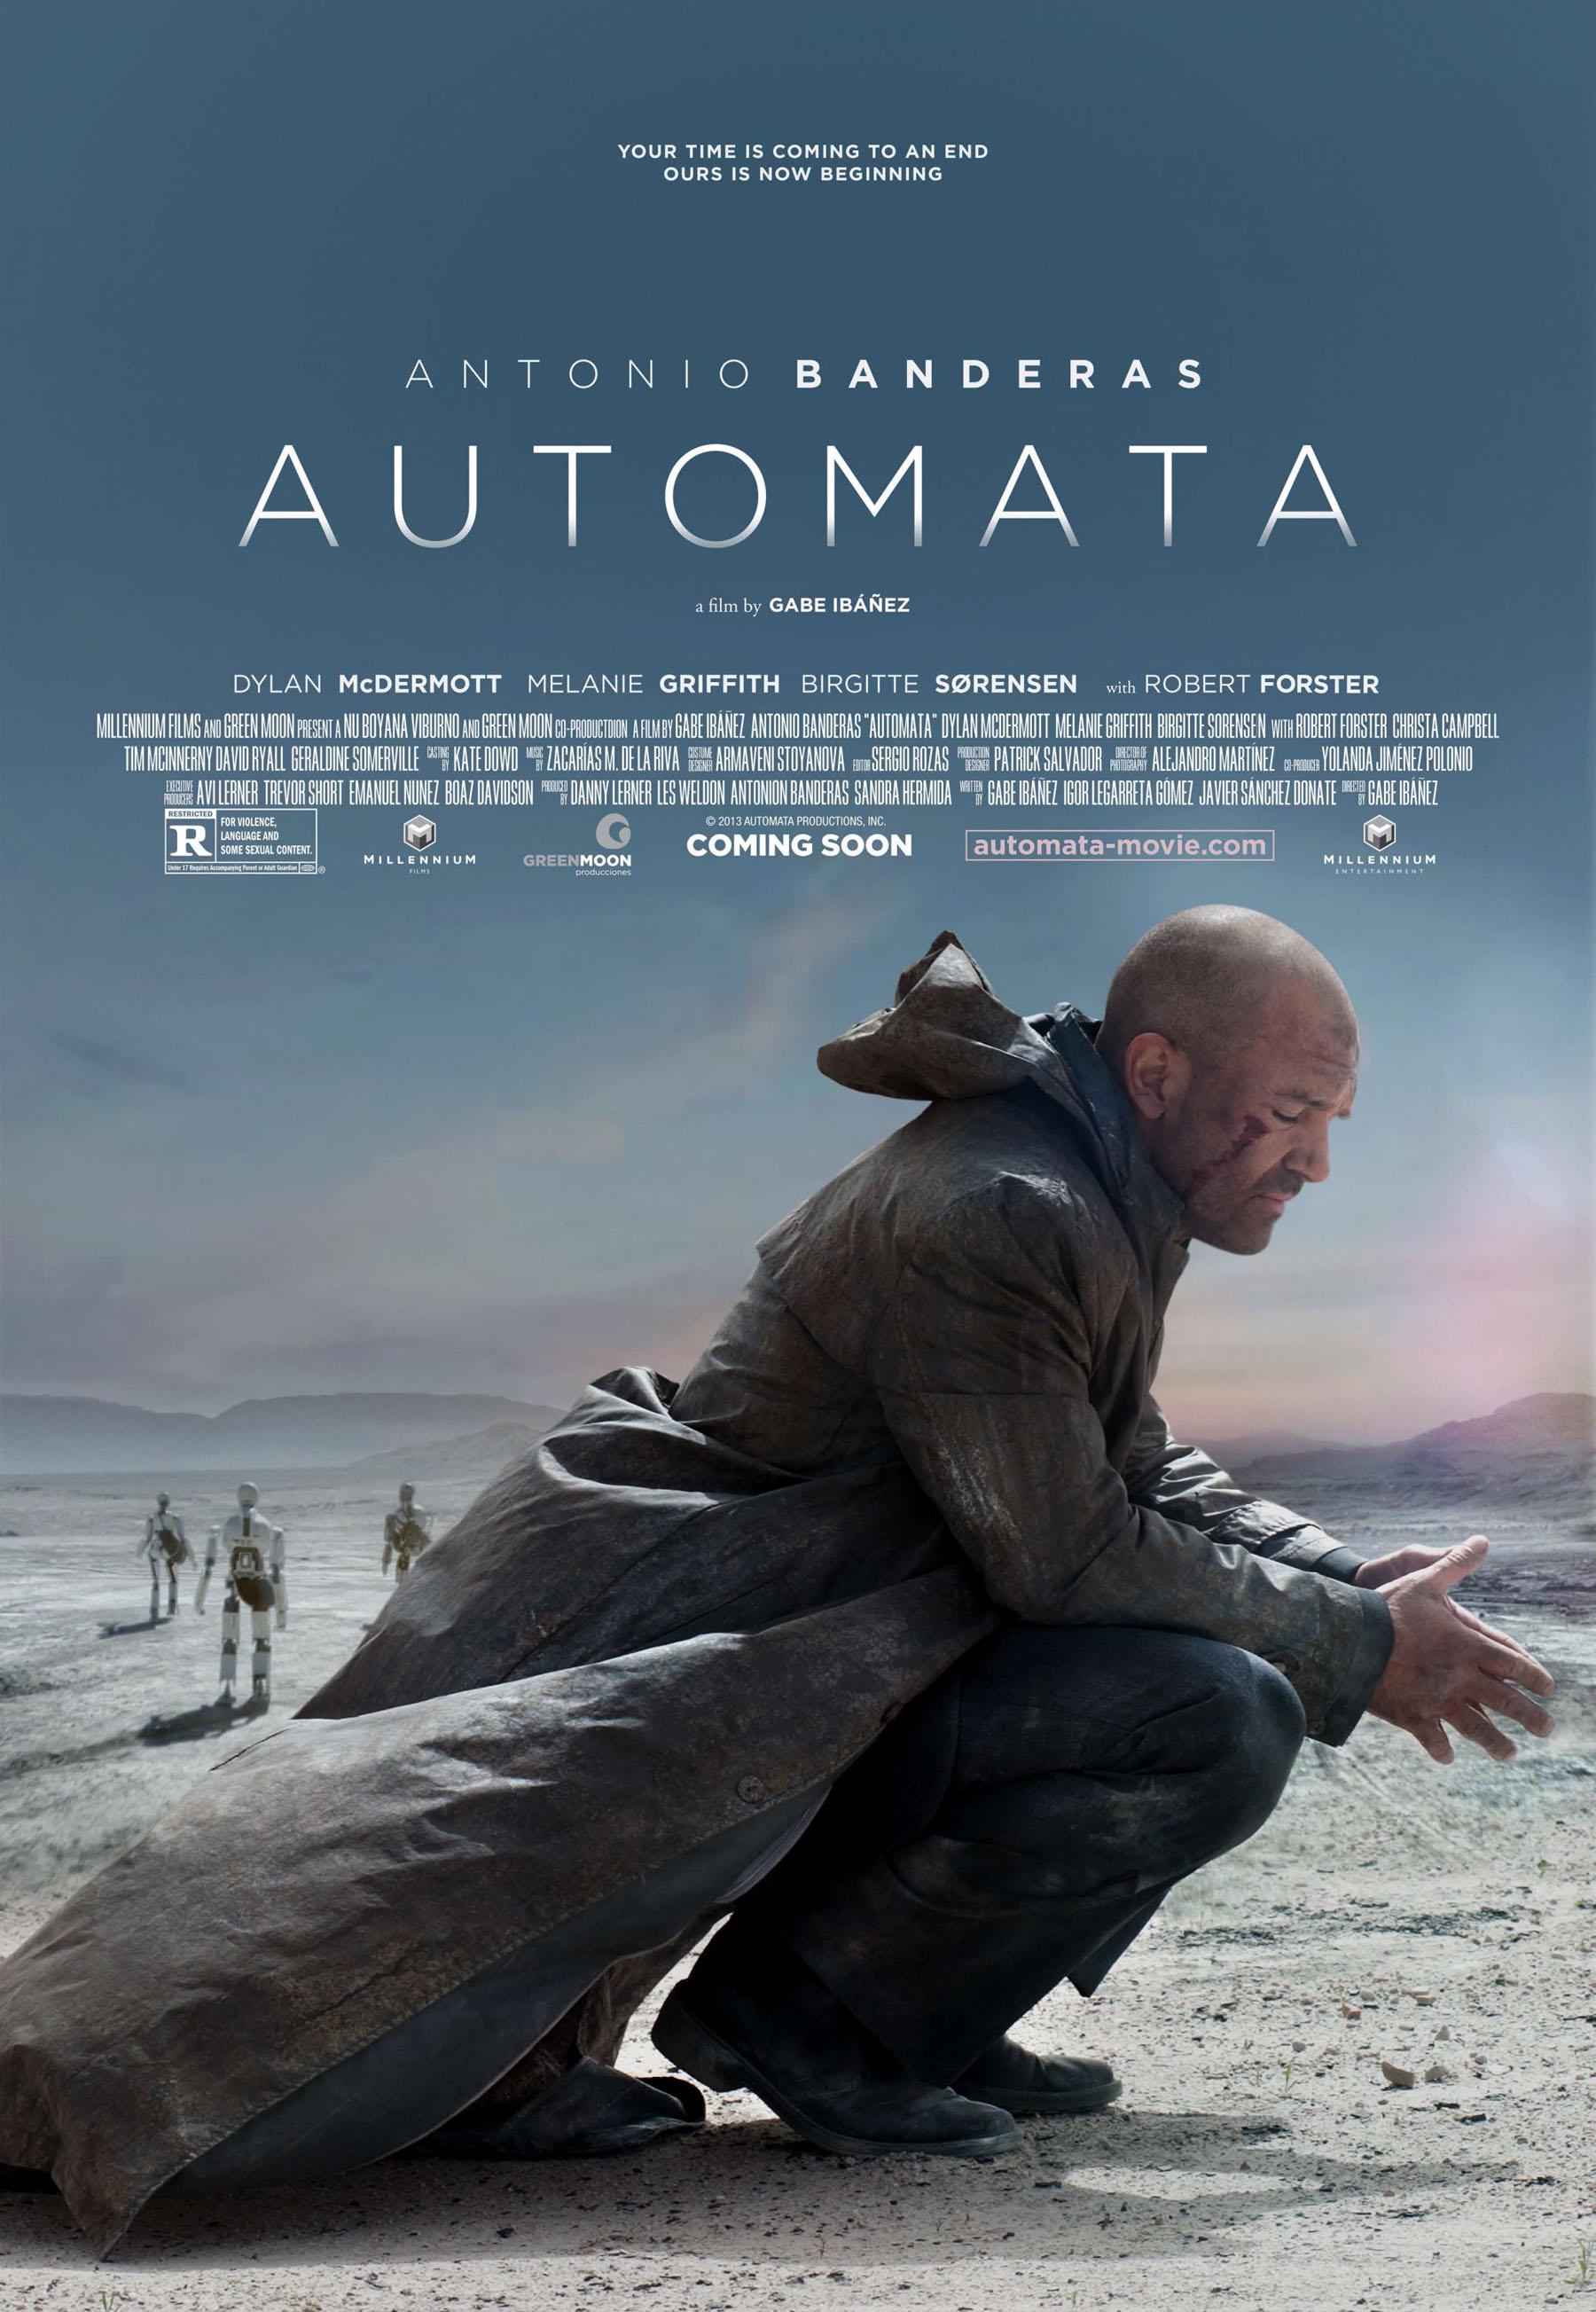 Automata Movie Review